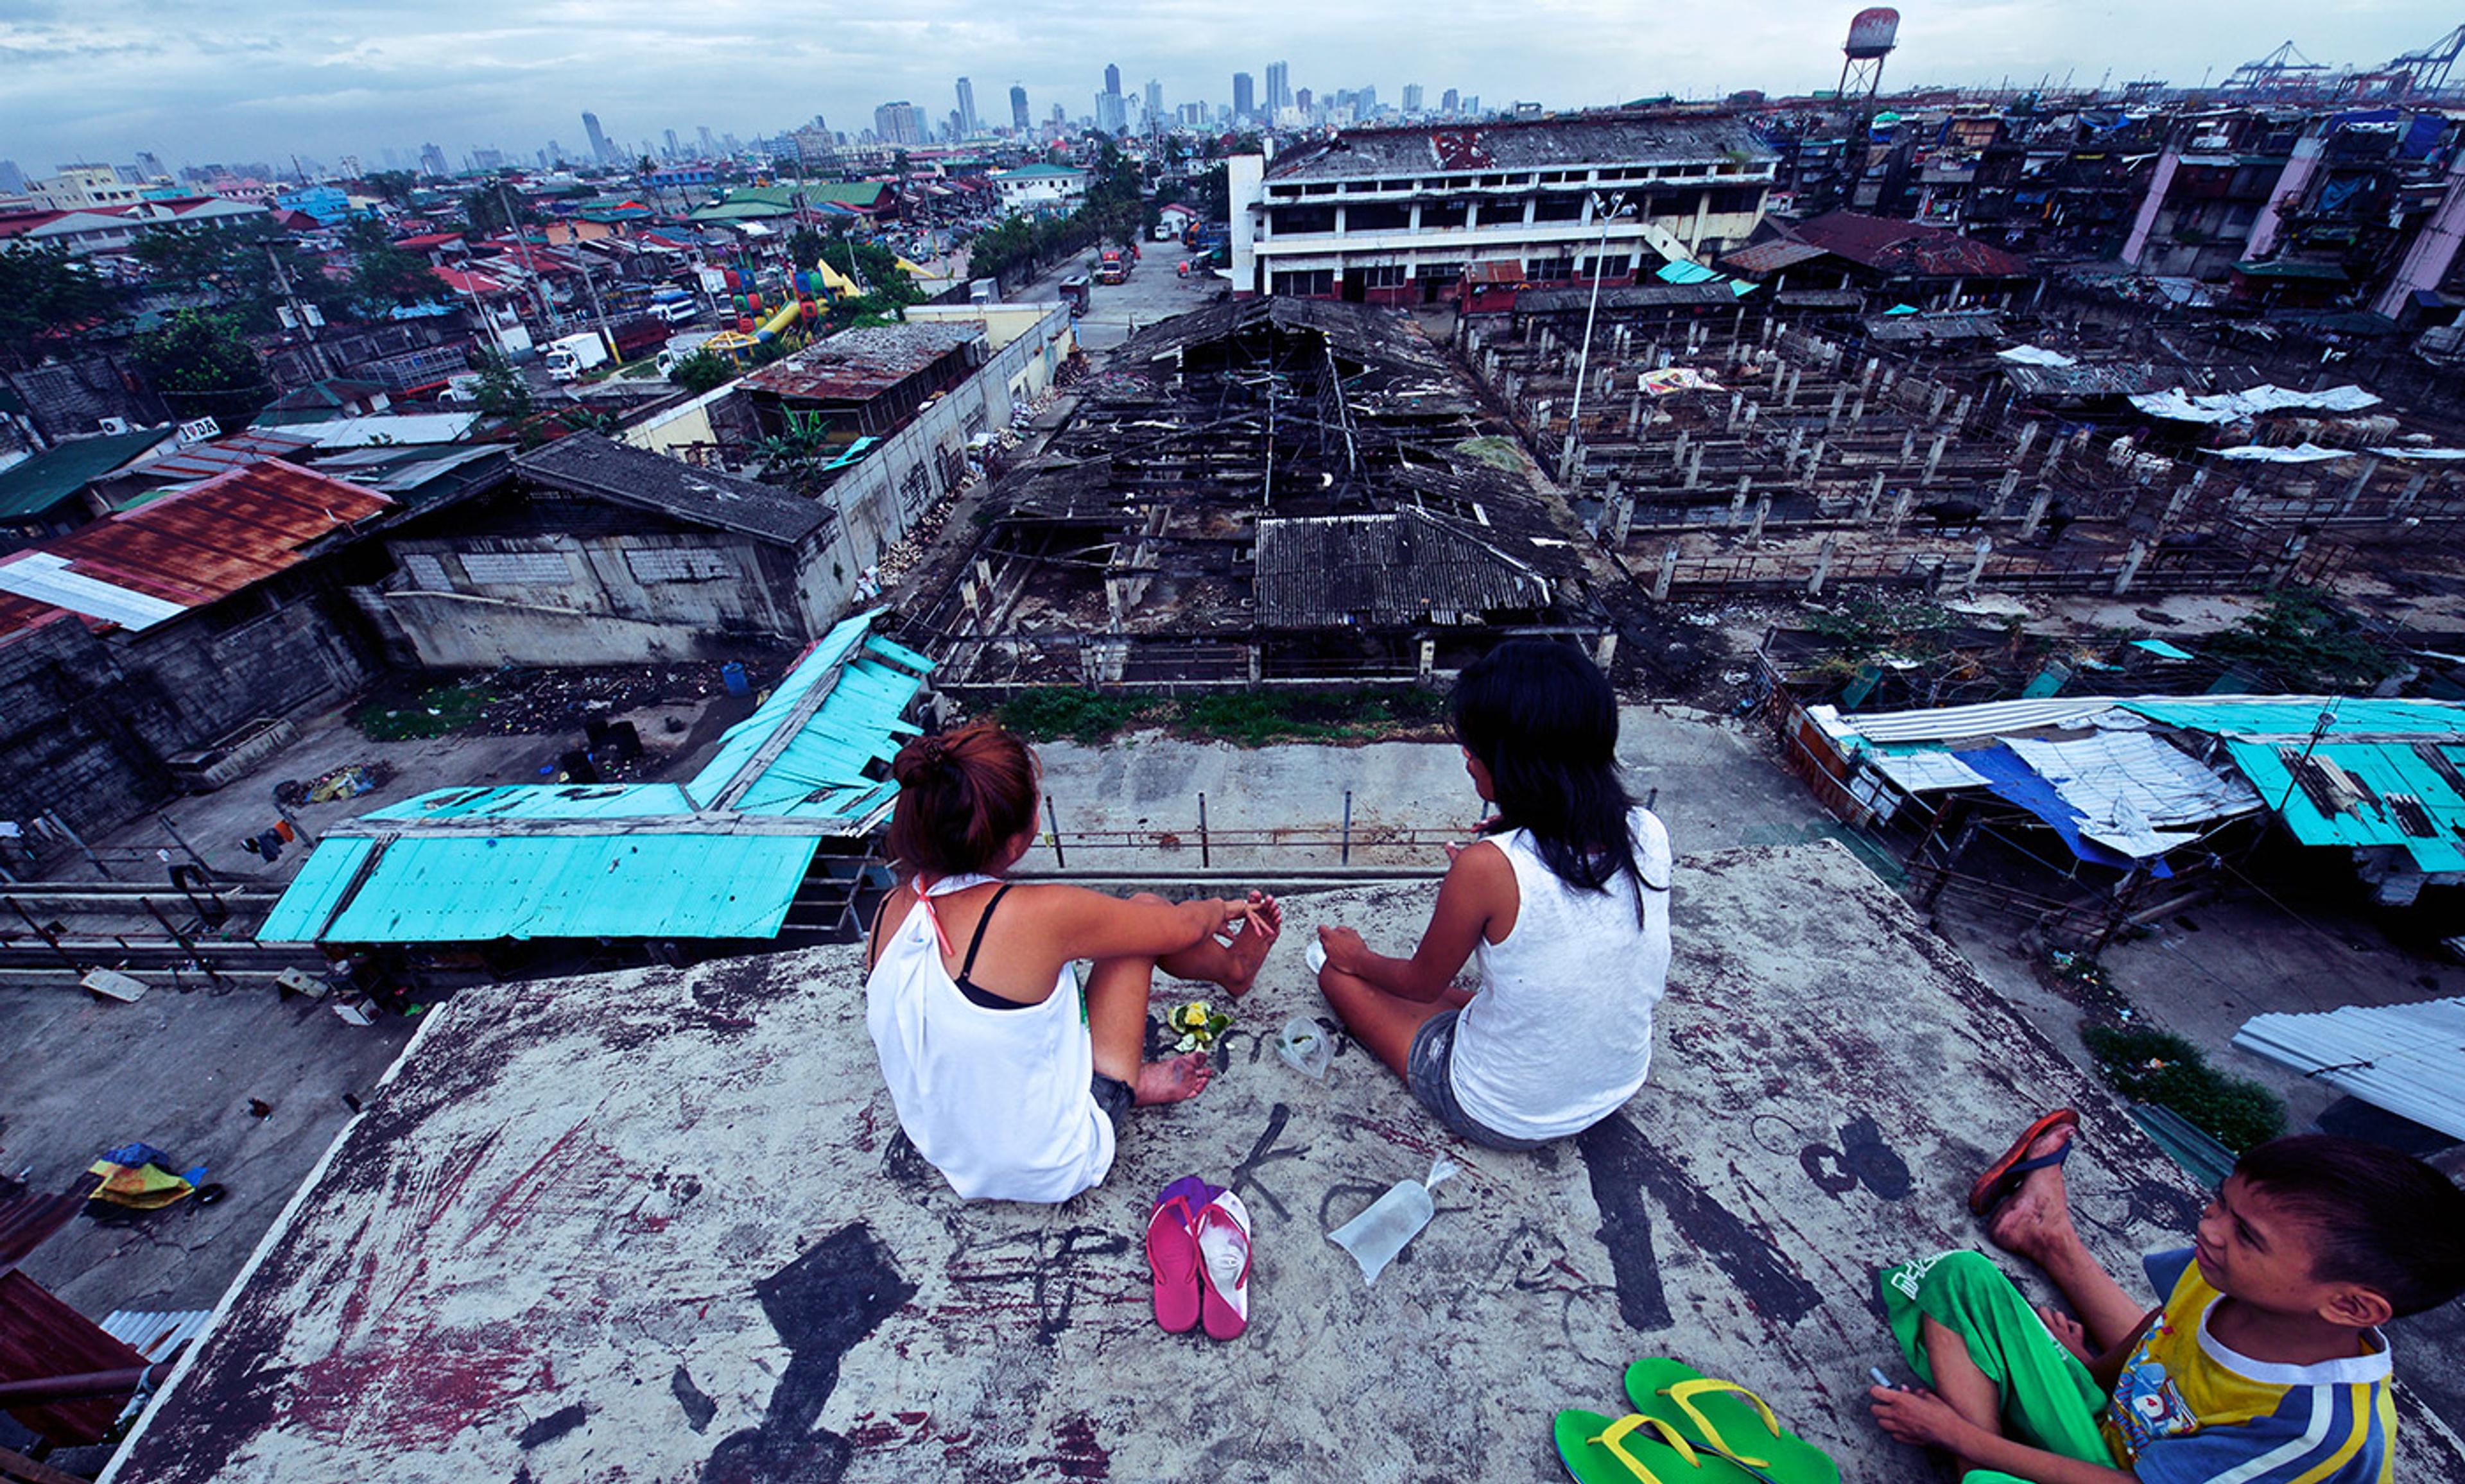 <p>Relaxing on a Manila rooftop. <em>Photo by John Christian Fjellestad/Flickr</em></p>